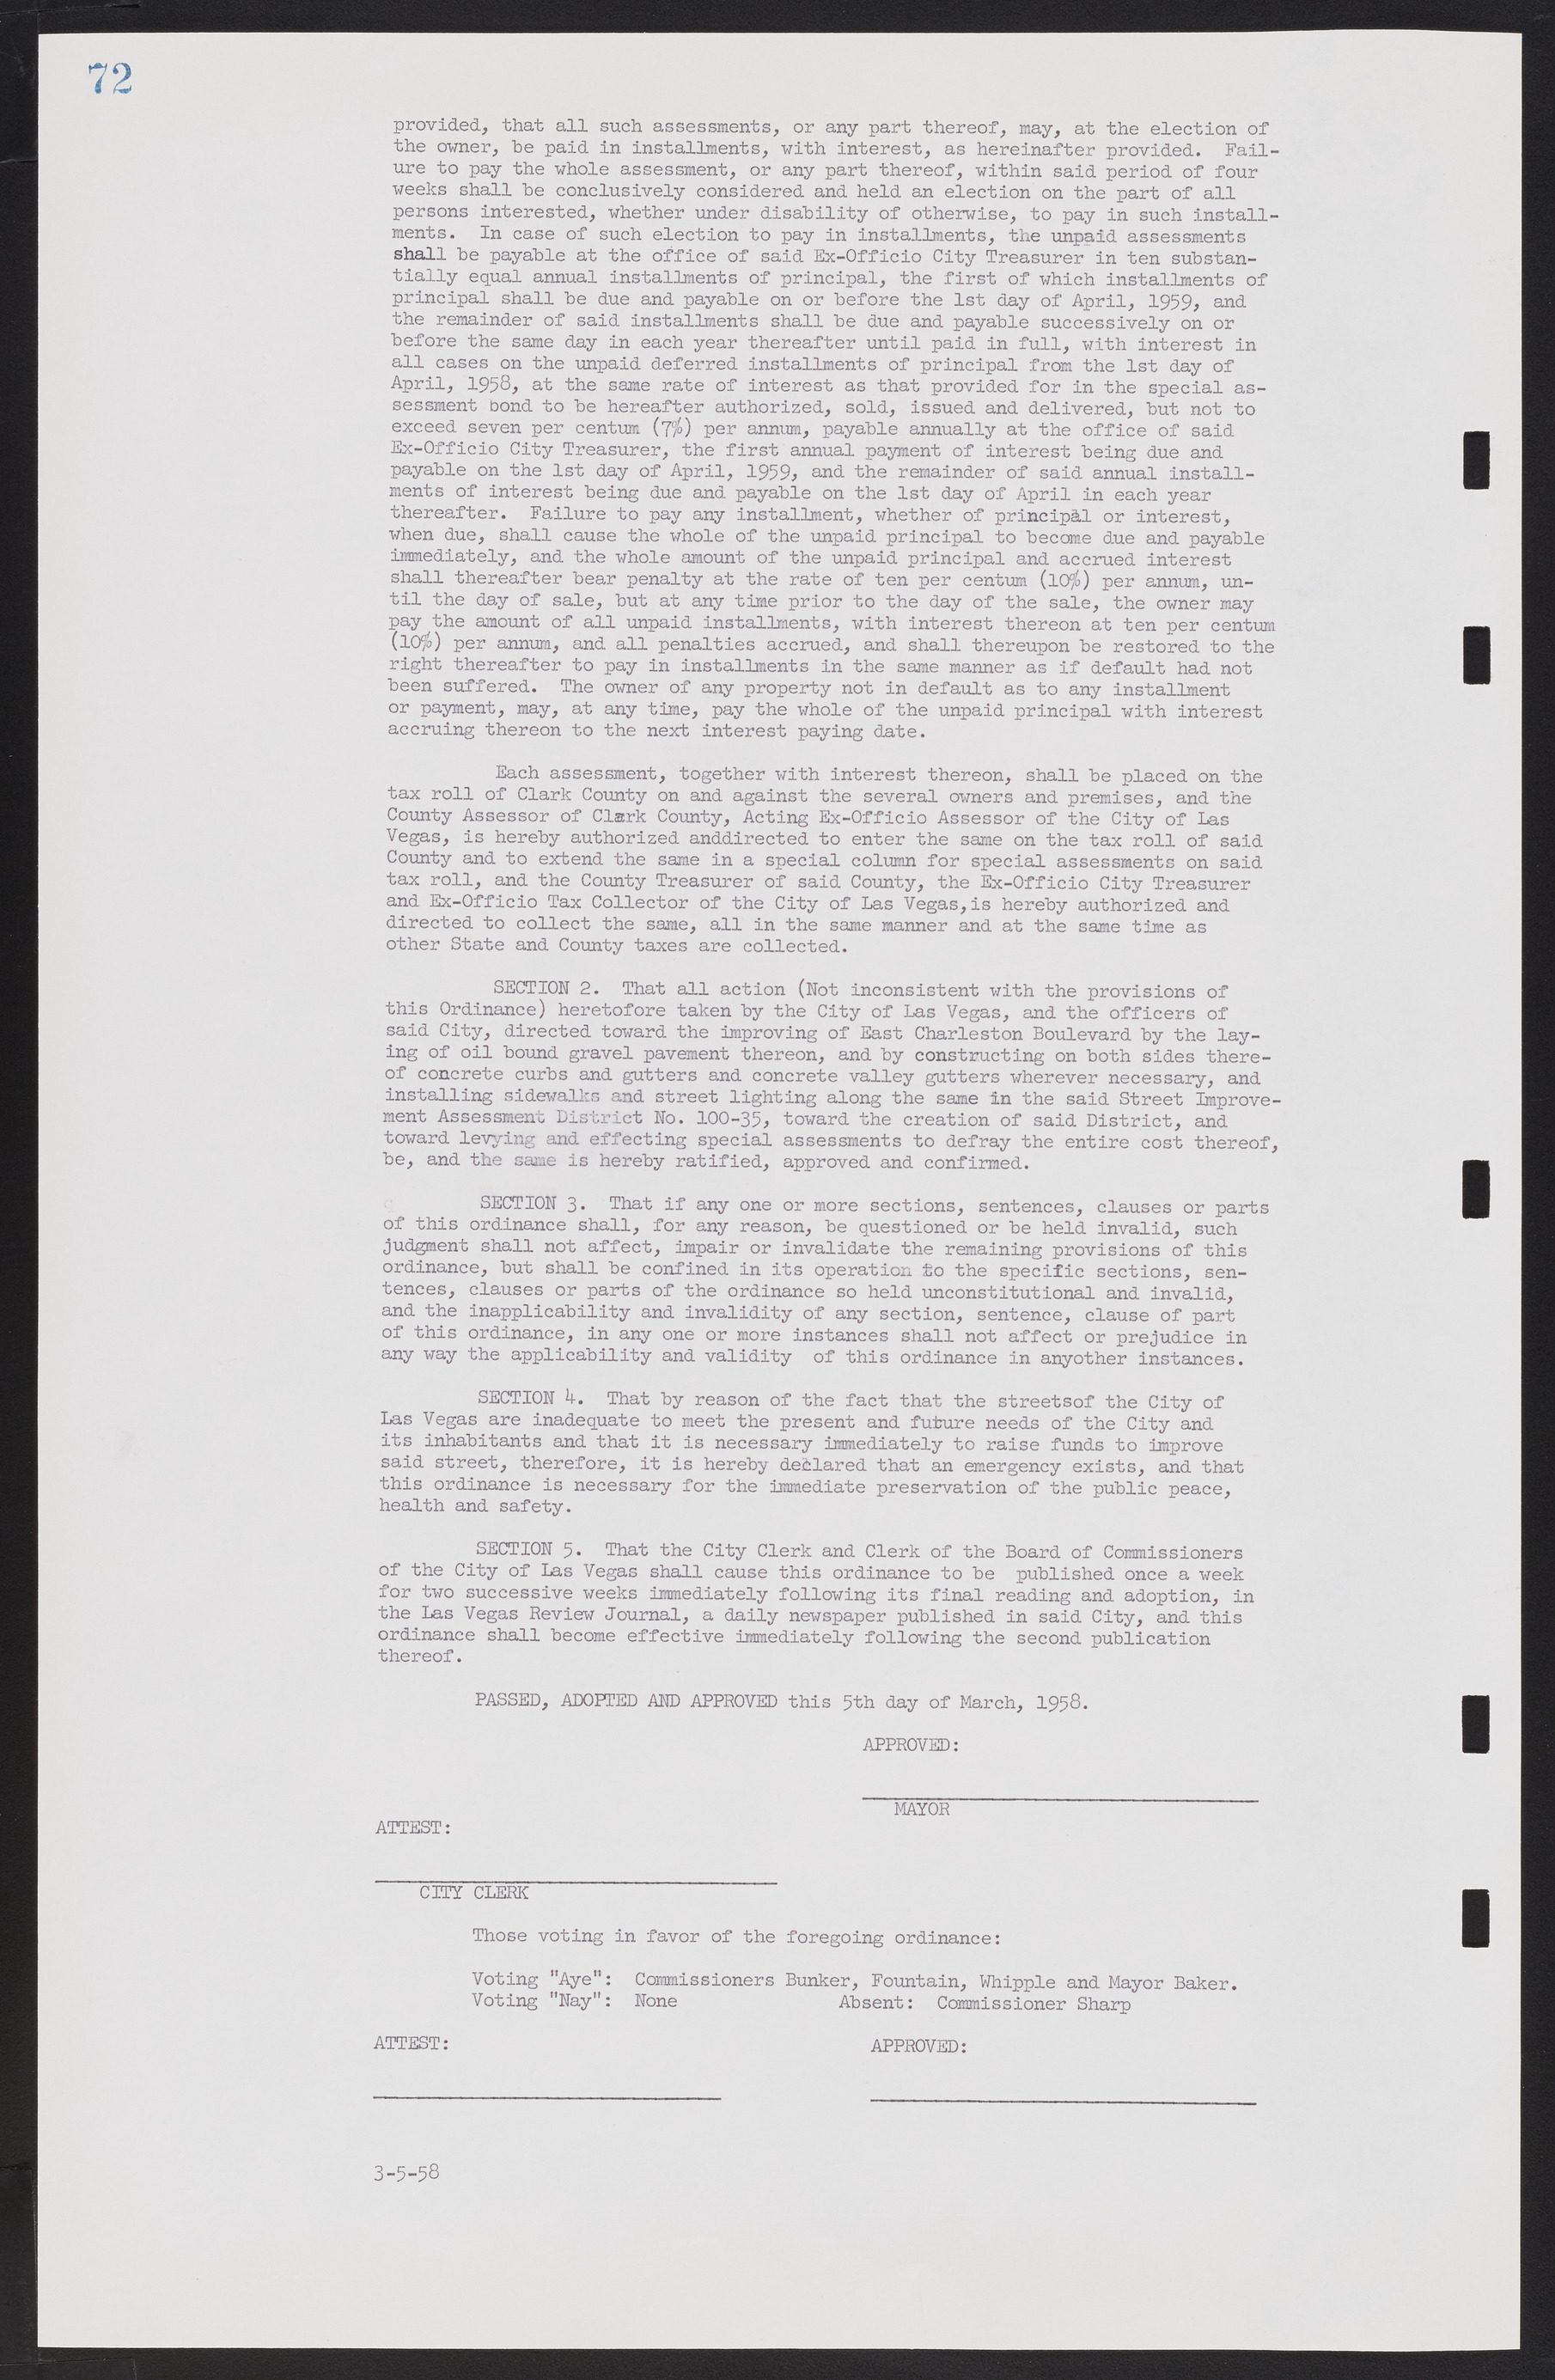 Las Vegas City Commission Minutes, November 20, 1957 to December 2, 1959, lvc000011-76